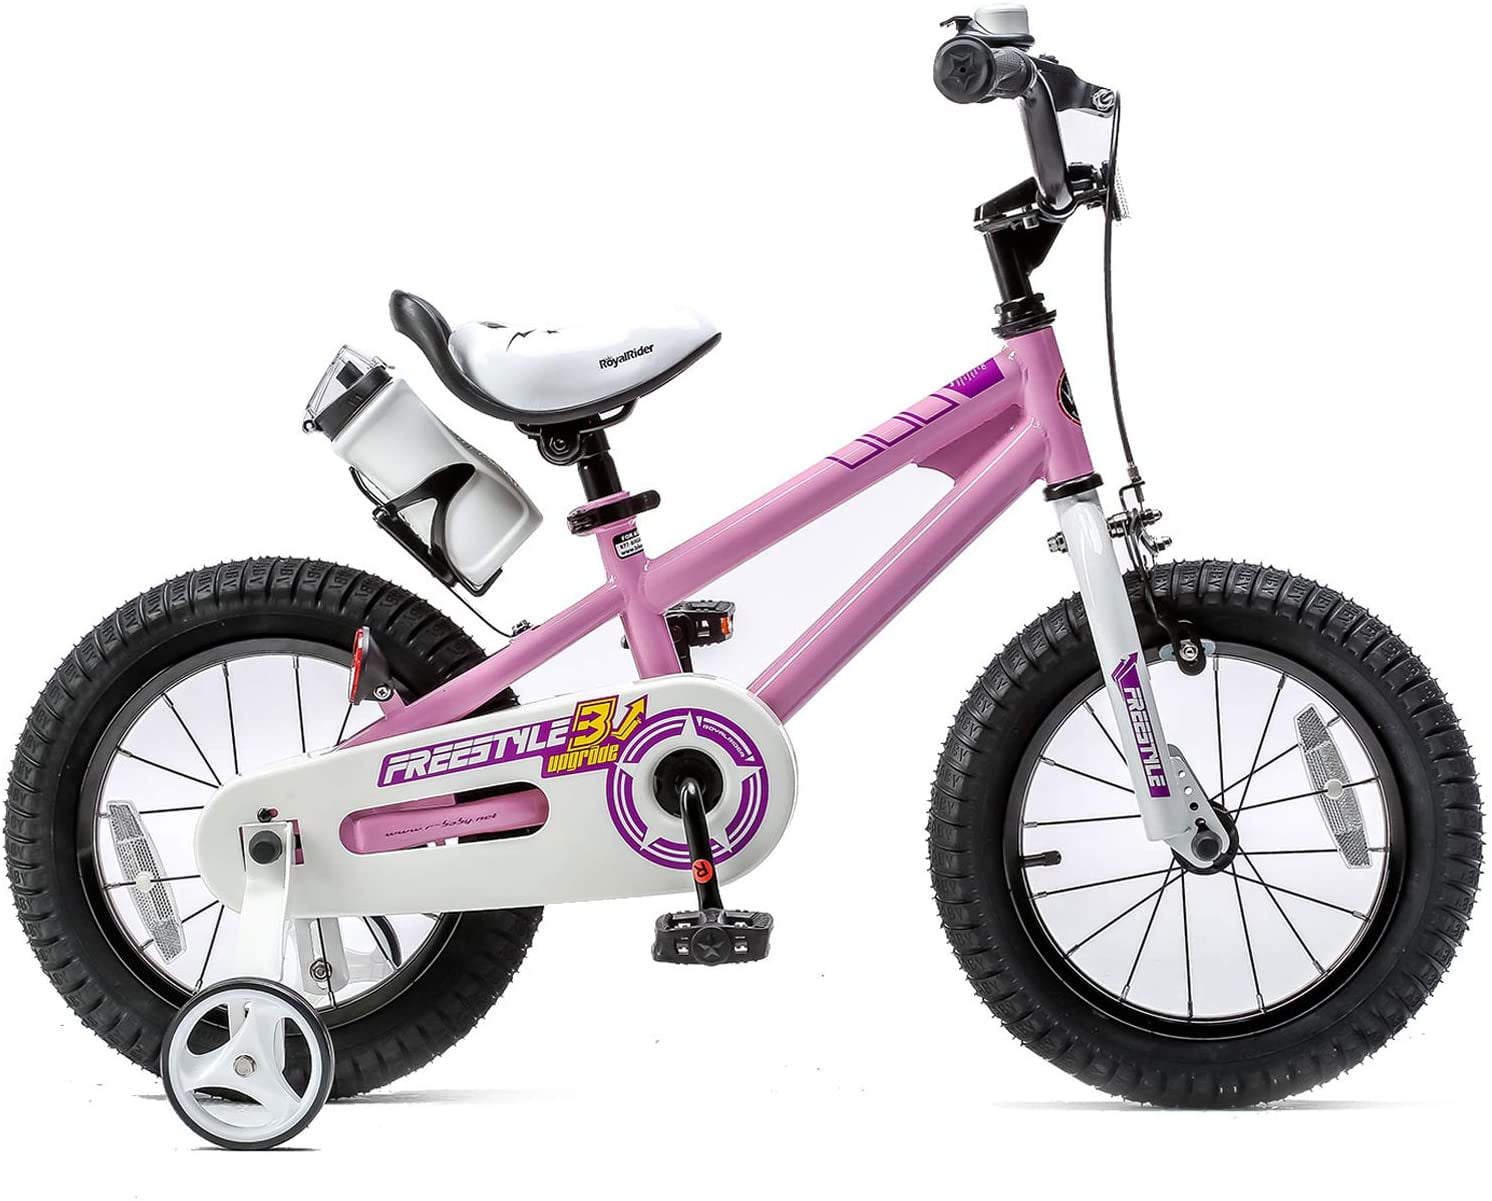 Kids Children Moto Bike Bicycle Motobike BMX Bikes for Boys Outdoor Toy Gifts 